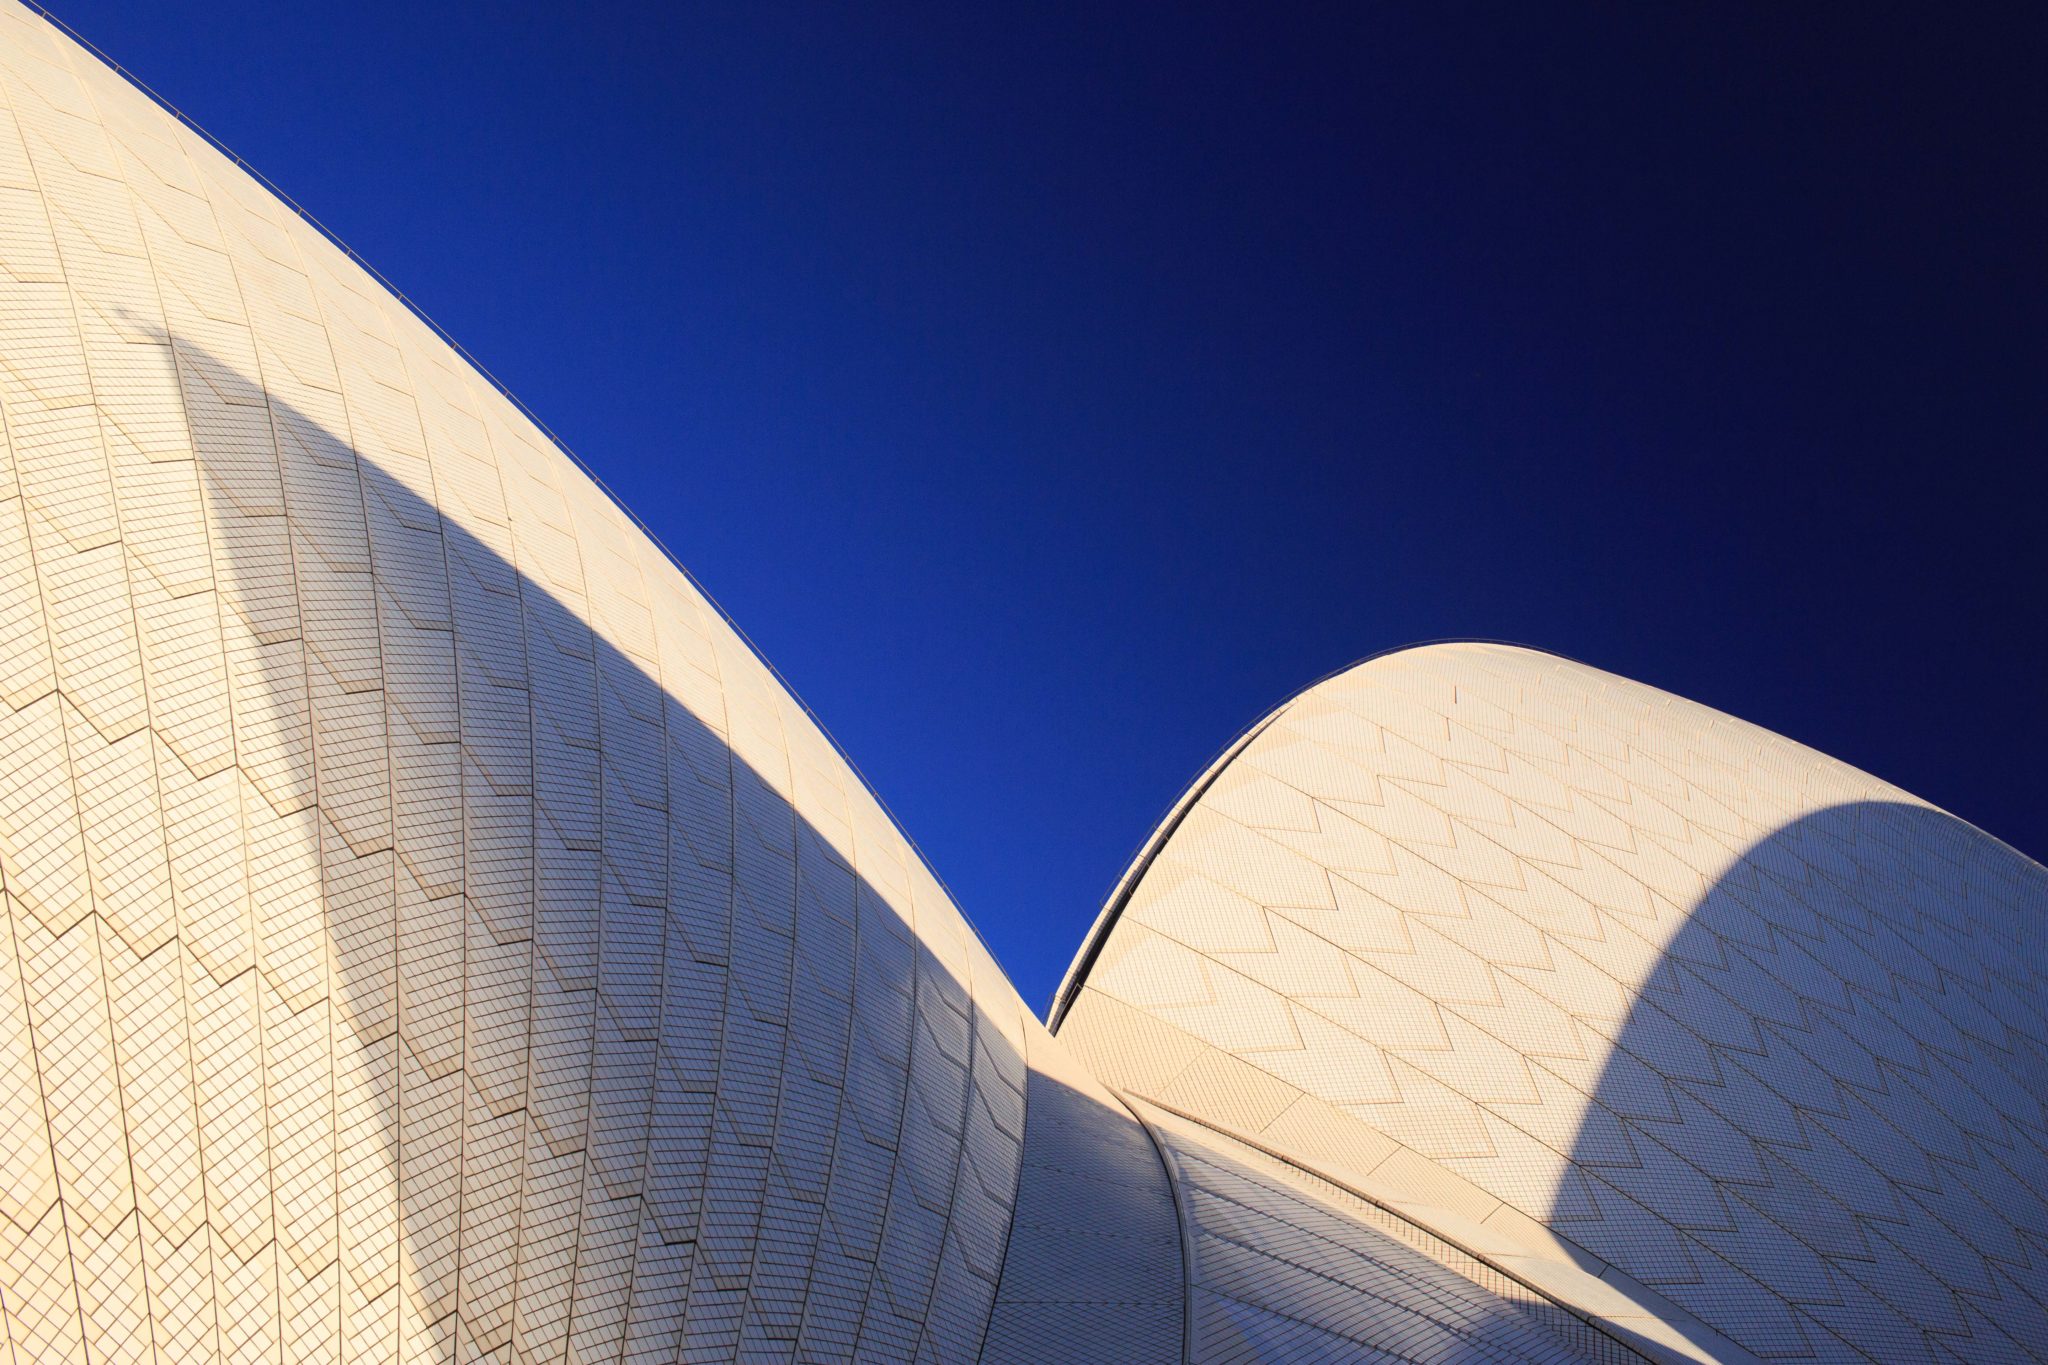 Shadows on the Sydney Opera House